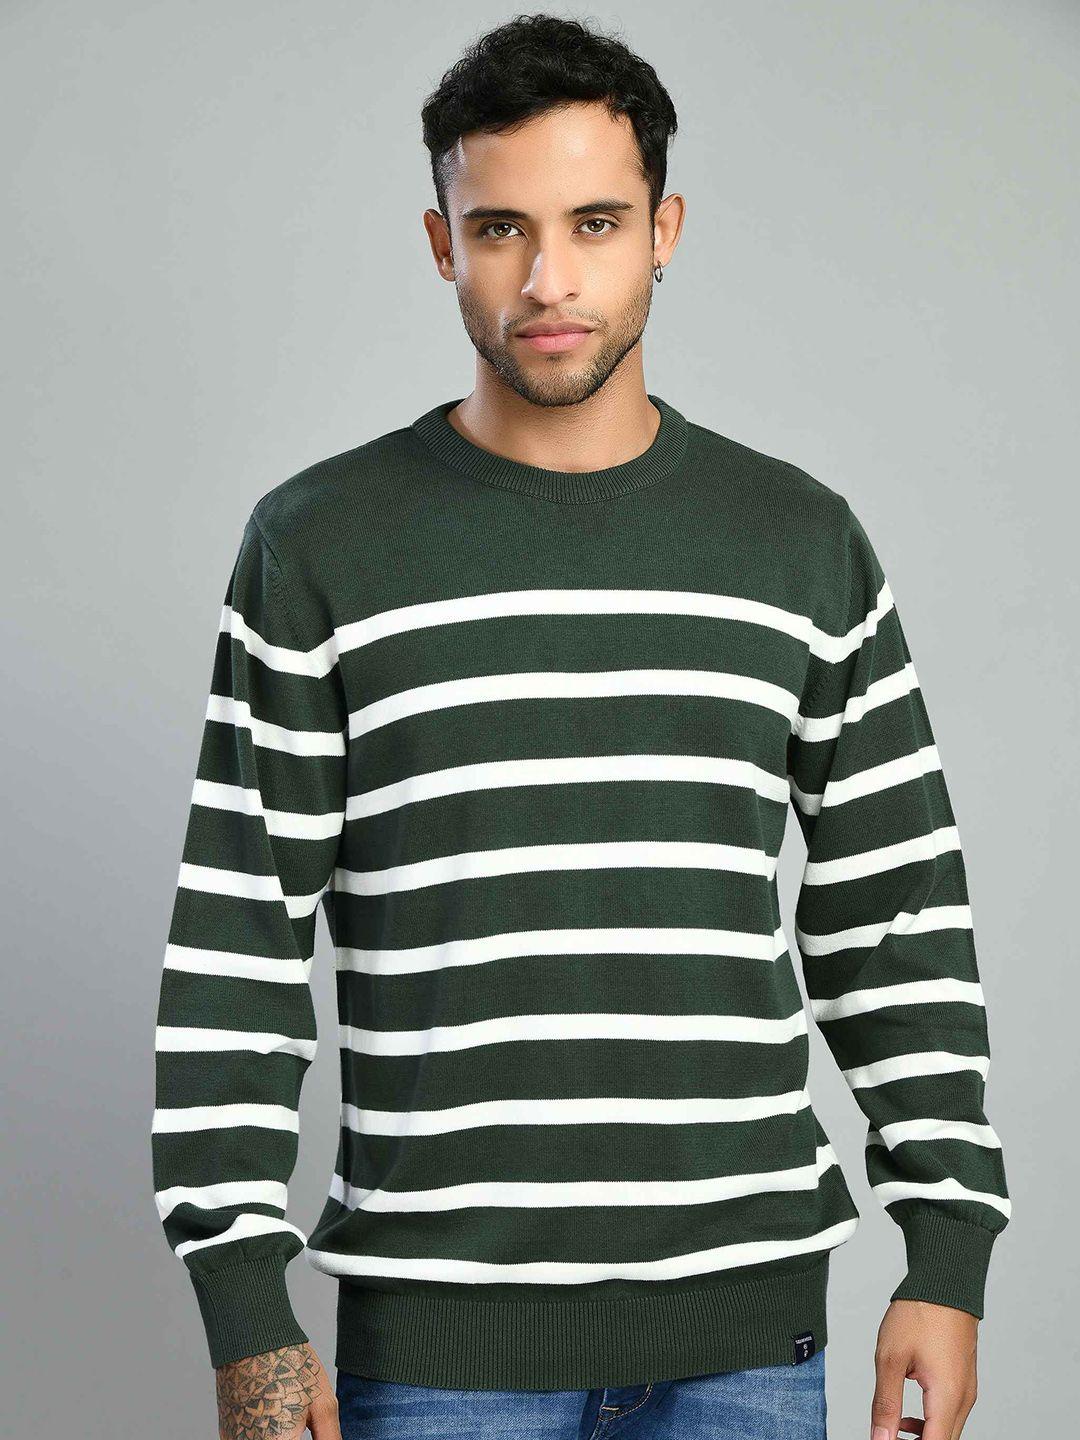 squirehood striped cotton pullover